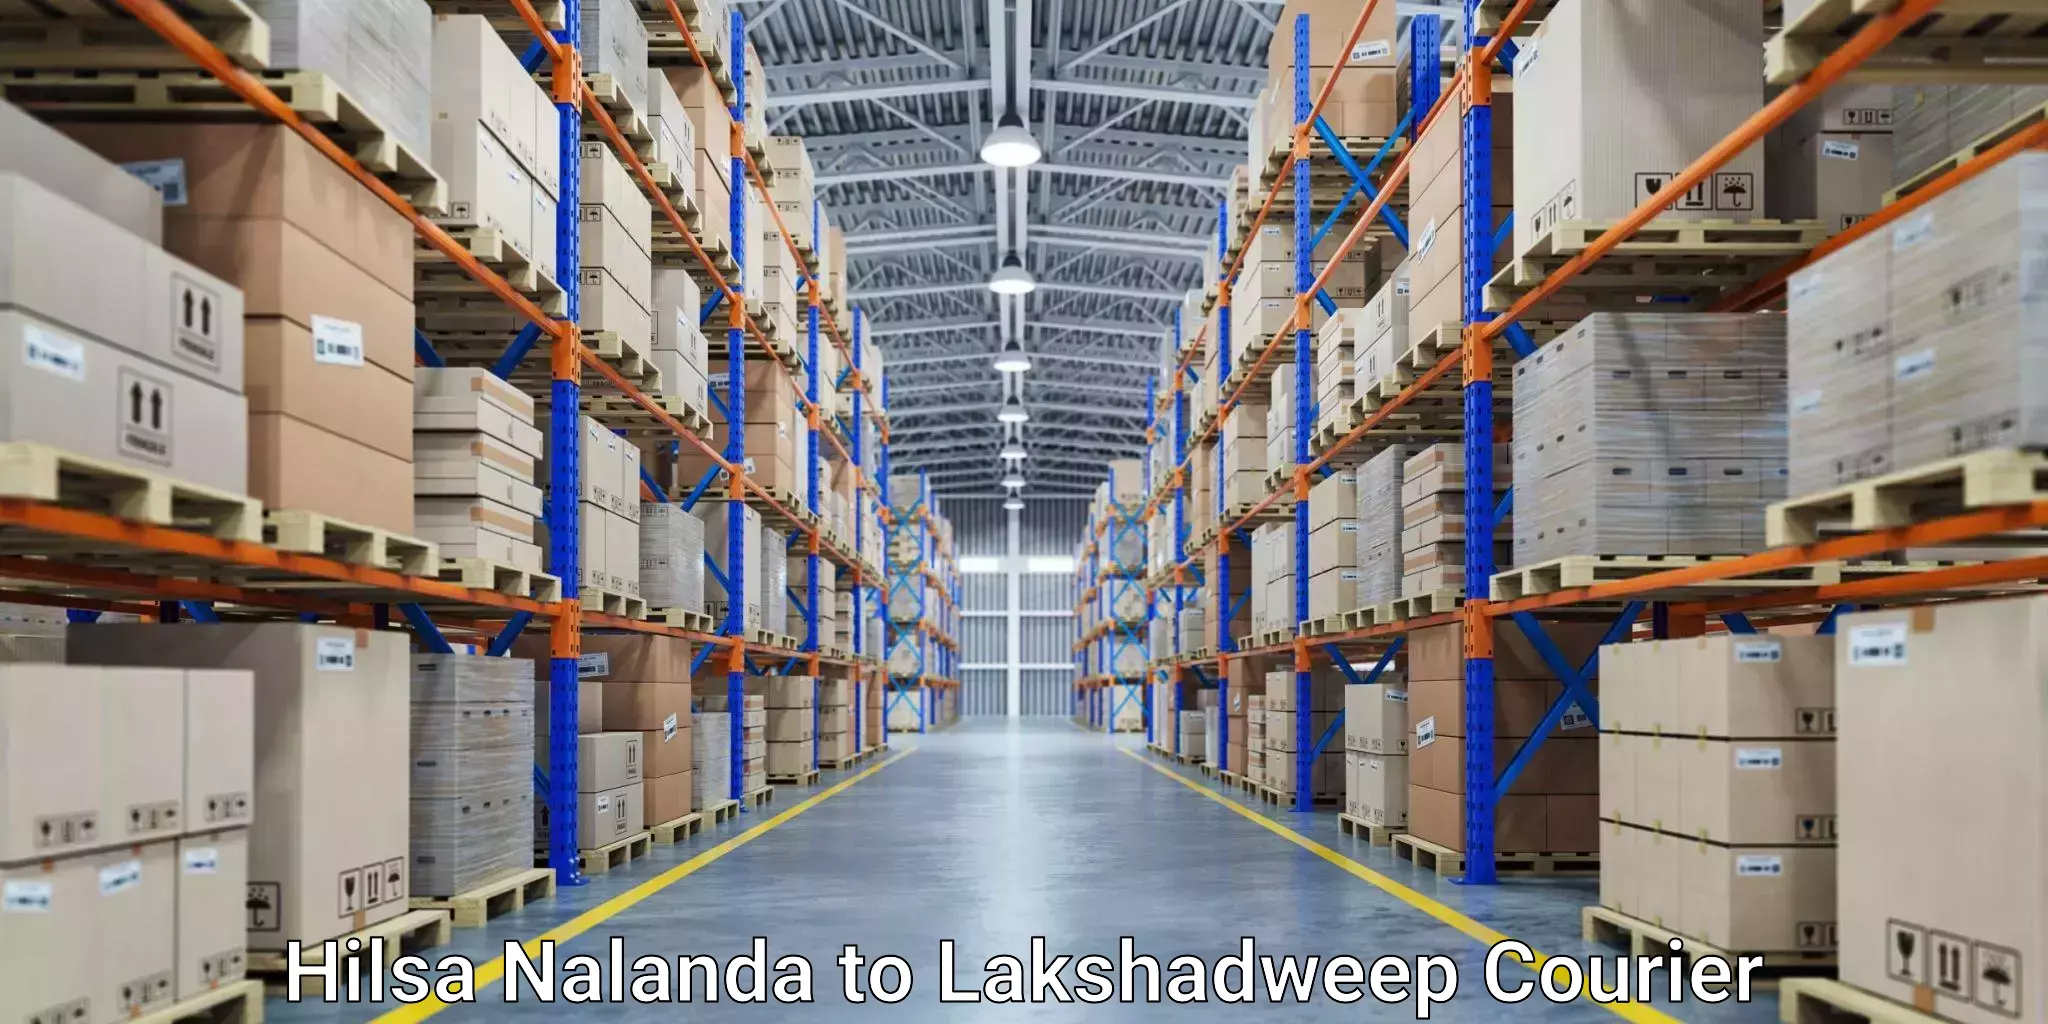 Same-day delivery solutions Hilsa Nalanda to Lakshadweep